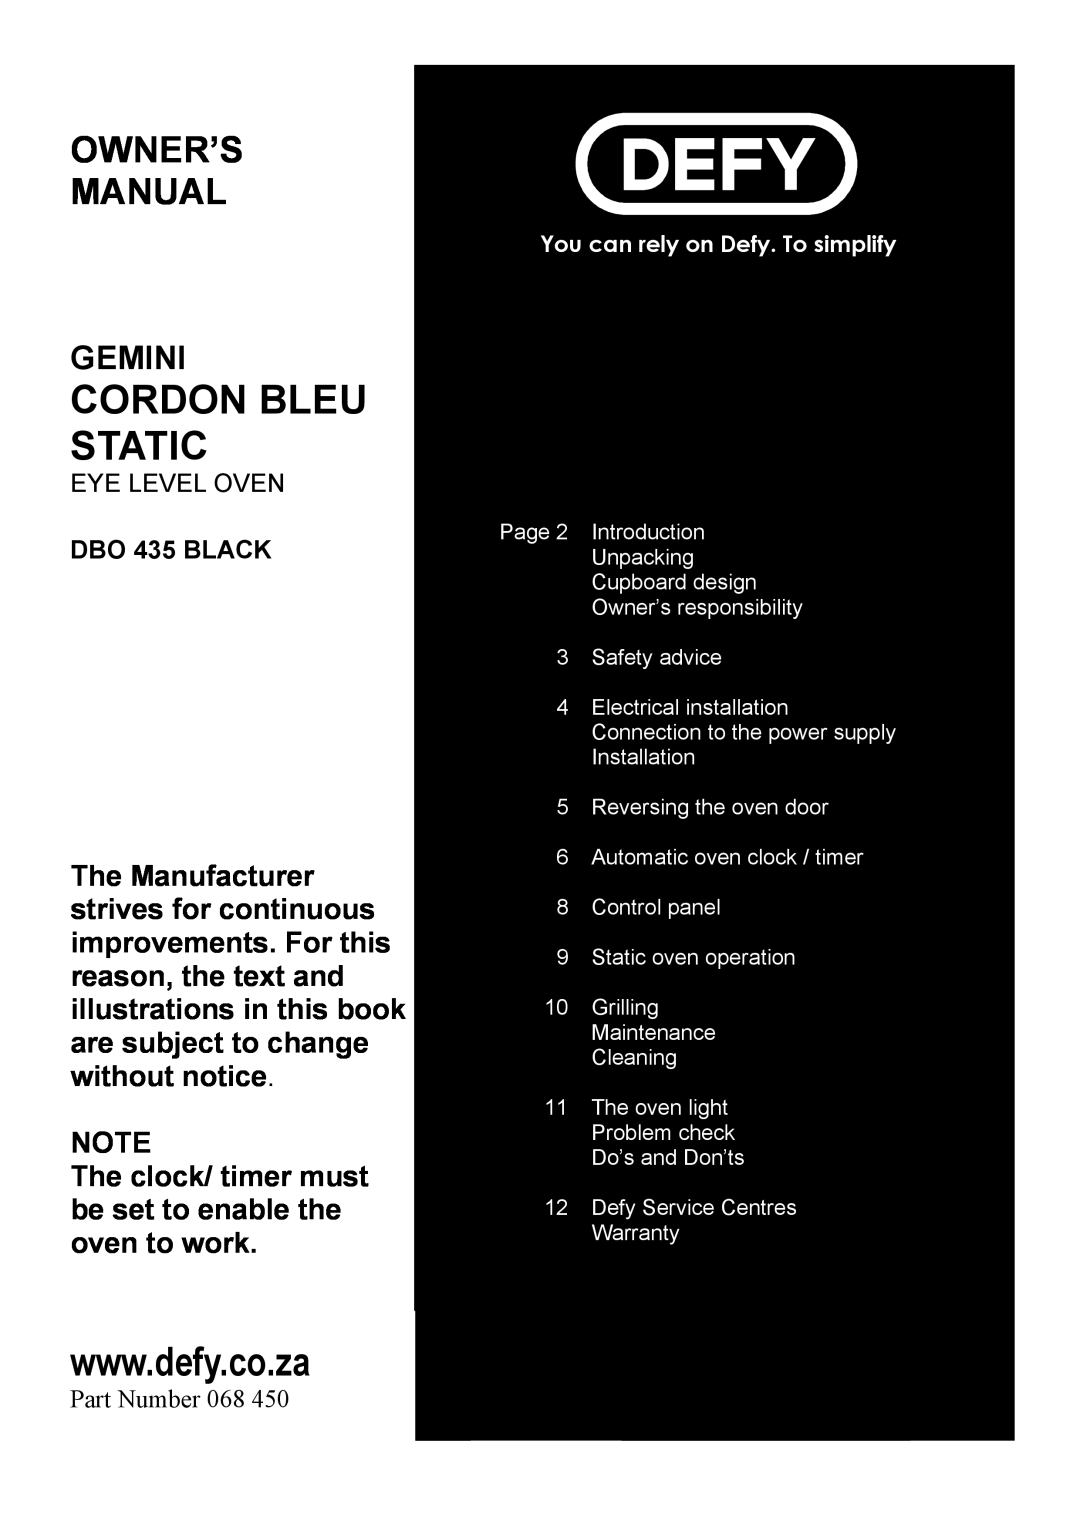 Defy Appliances DBO 435 Black owner manual Gemini, Cordon Bleu Static 